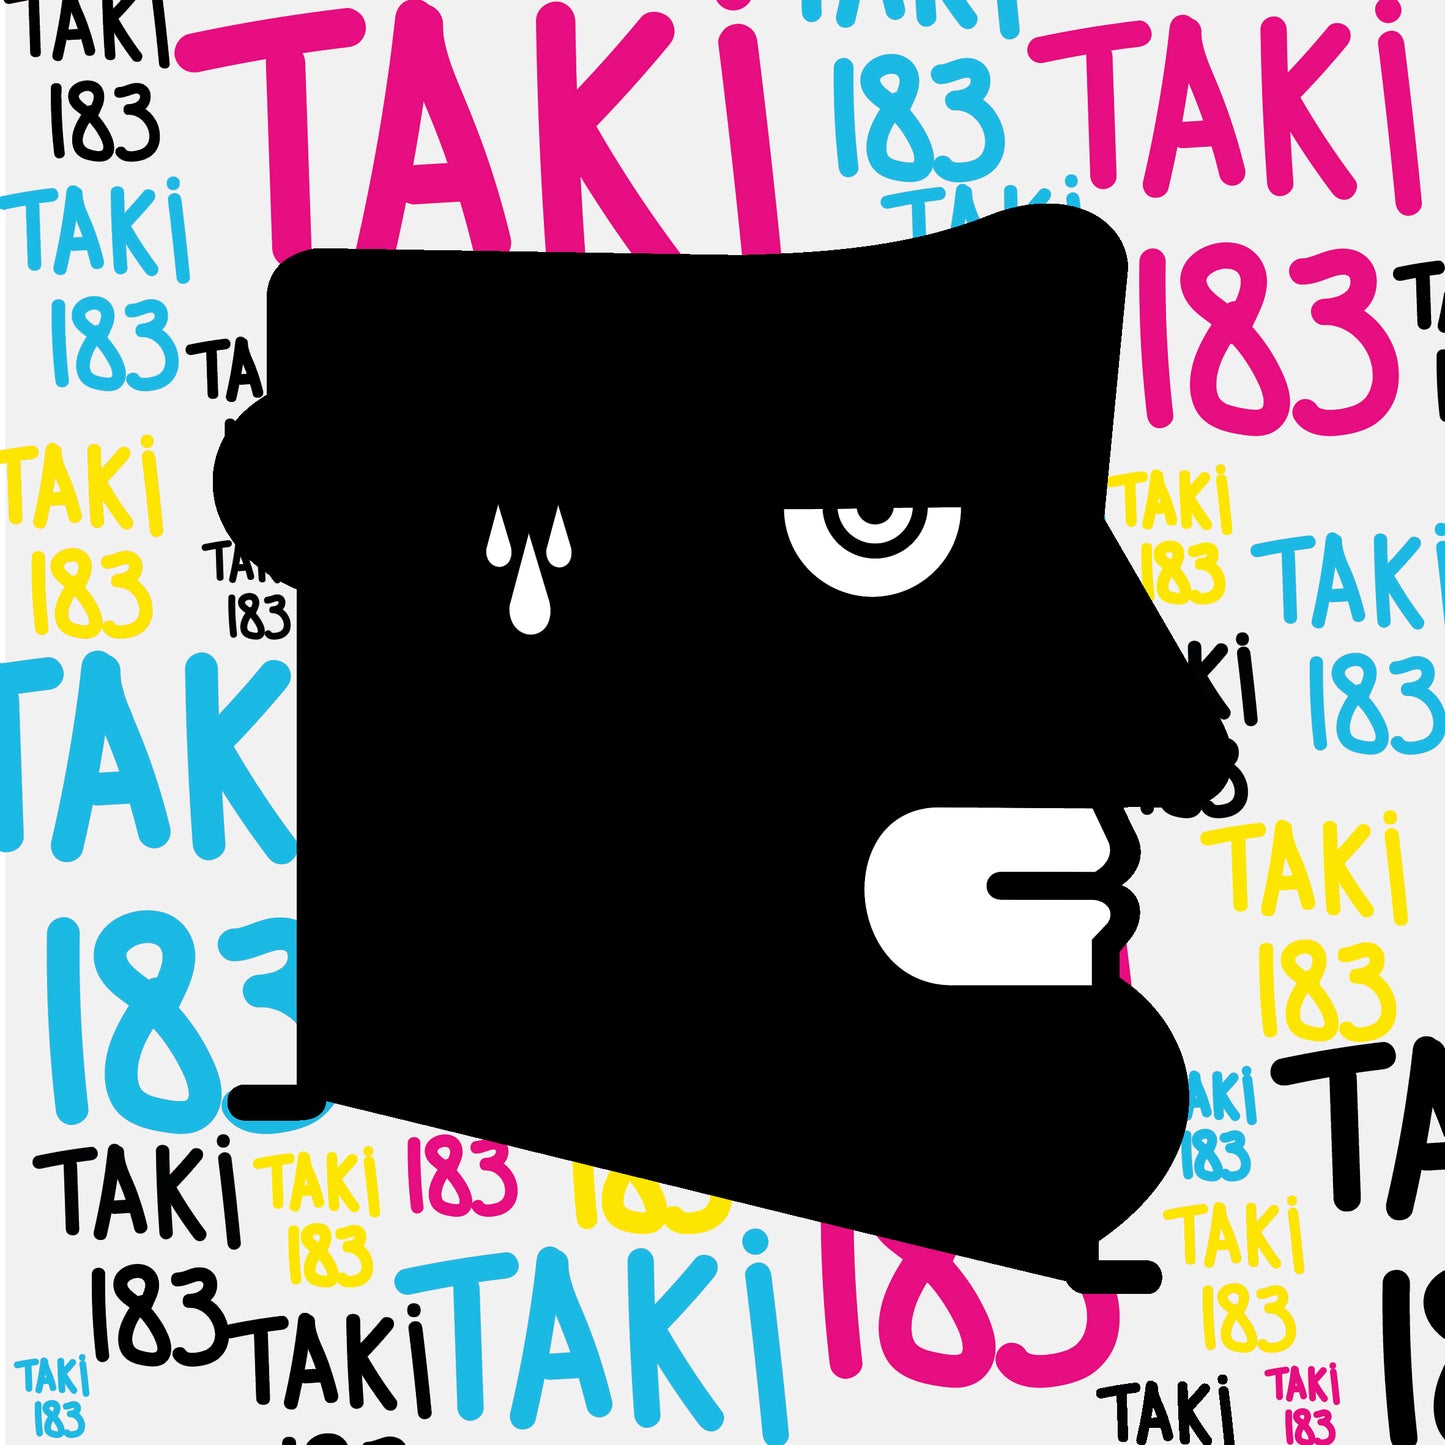 Taki 183 Cmyk (IABO classic leitmotiv - tribute 50th Anniversary)